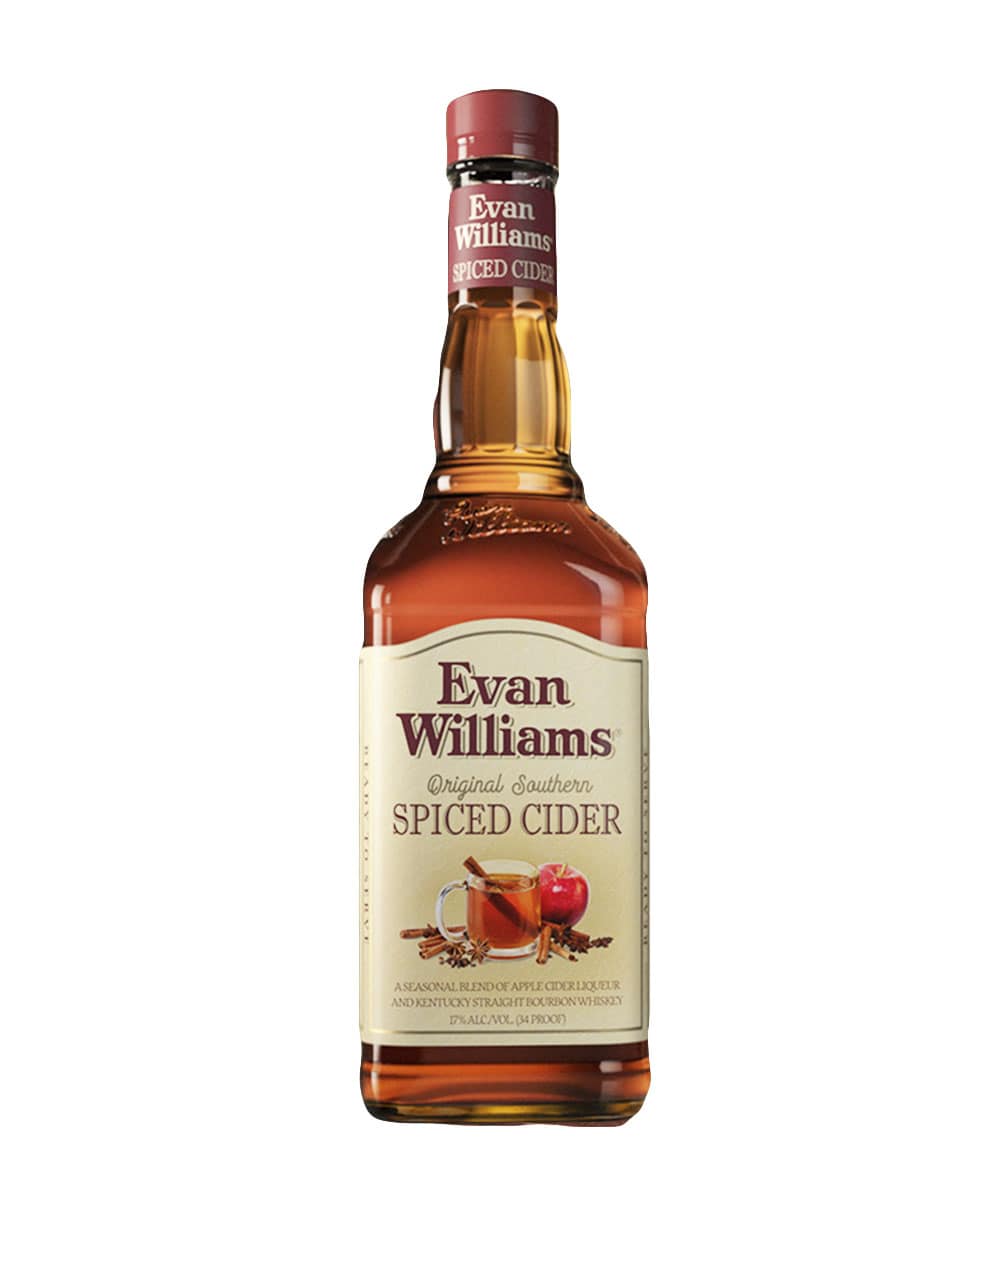 Evan Williams Spiced Cider Kentucky Straight Bourbon Whiskey